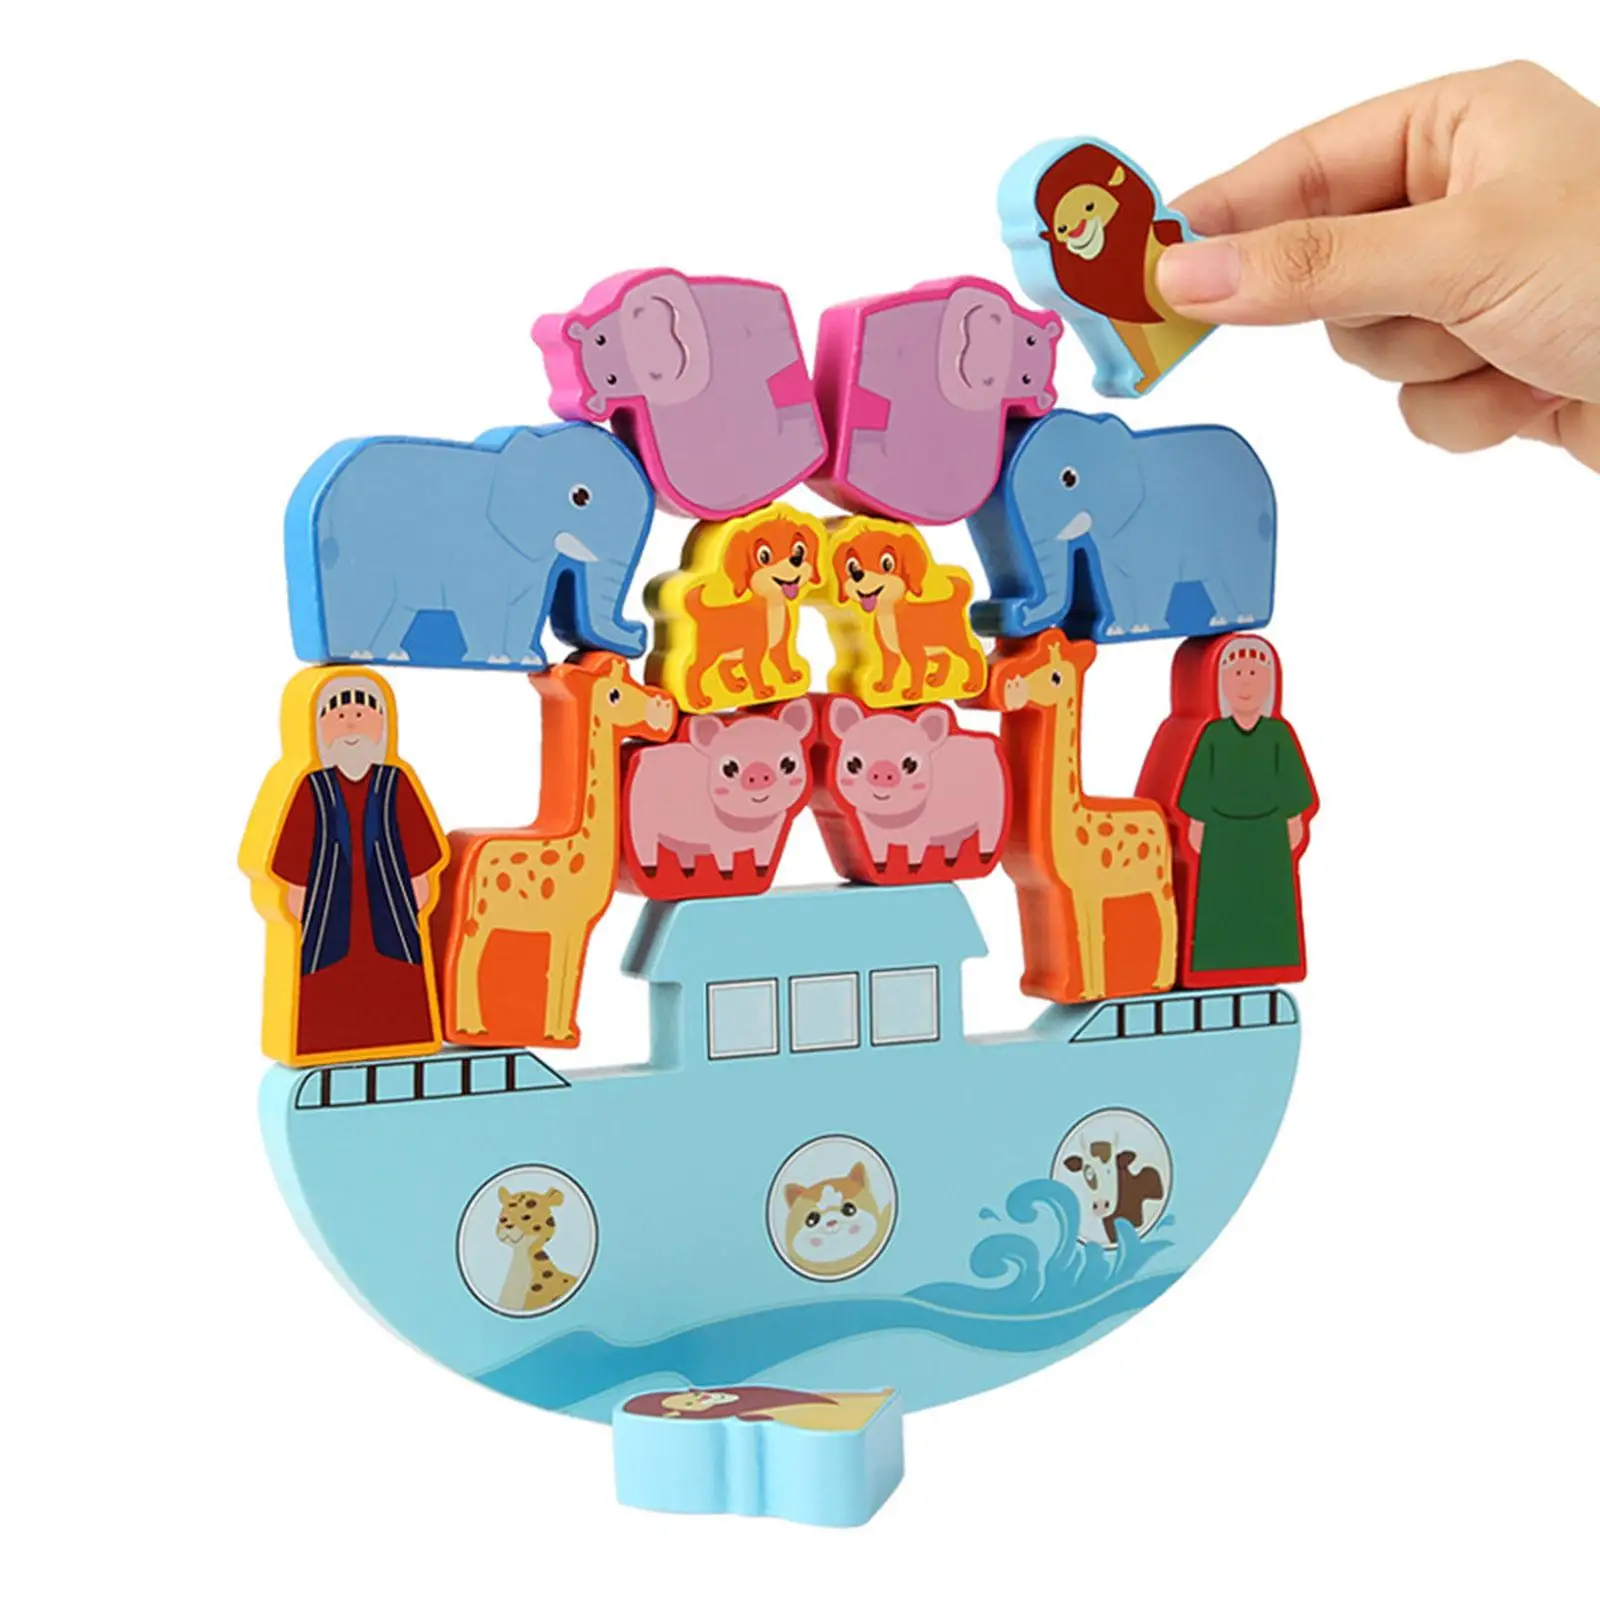 Funny Wooden Stacking Blocks Balancing Games Educational Toys Brain Development Preschool Game for Children Toddler Girls Boys